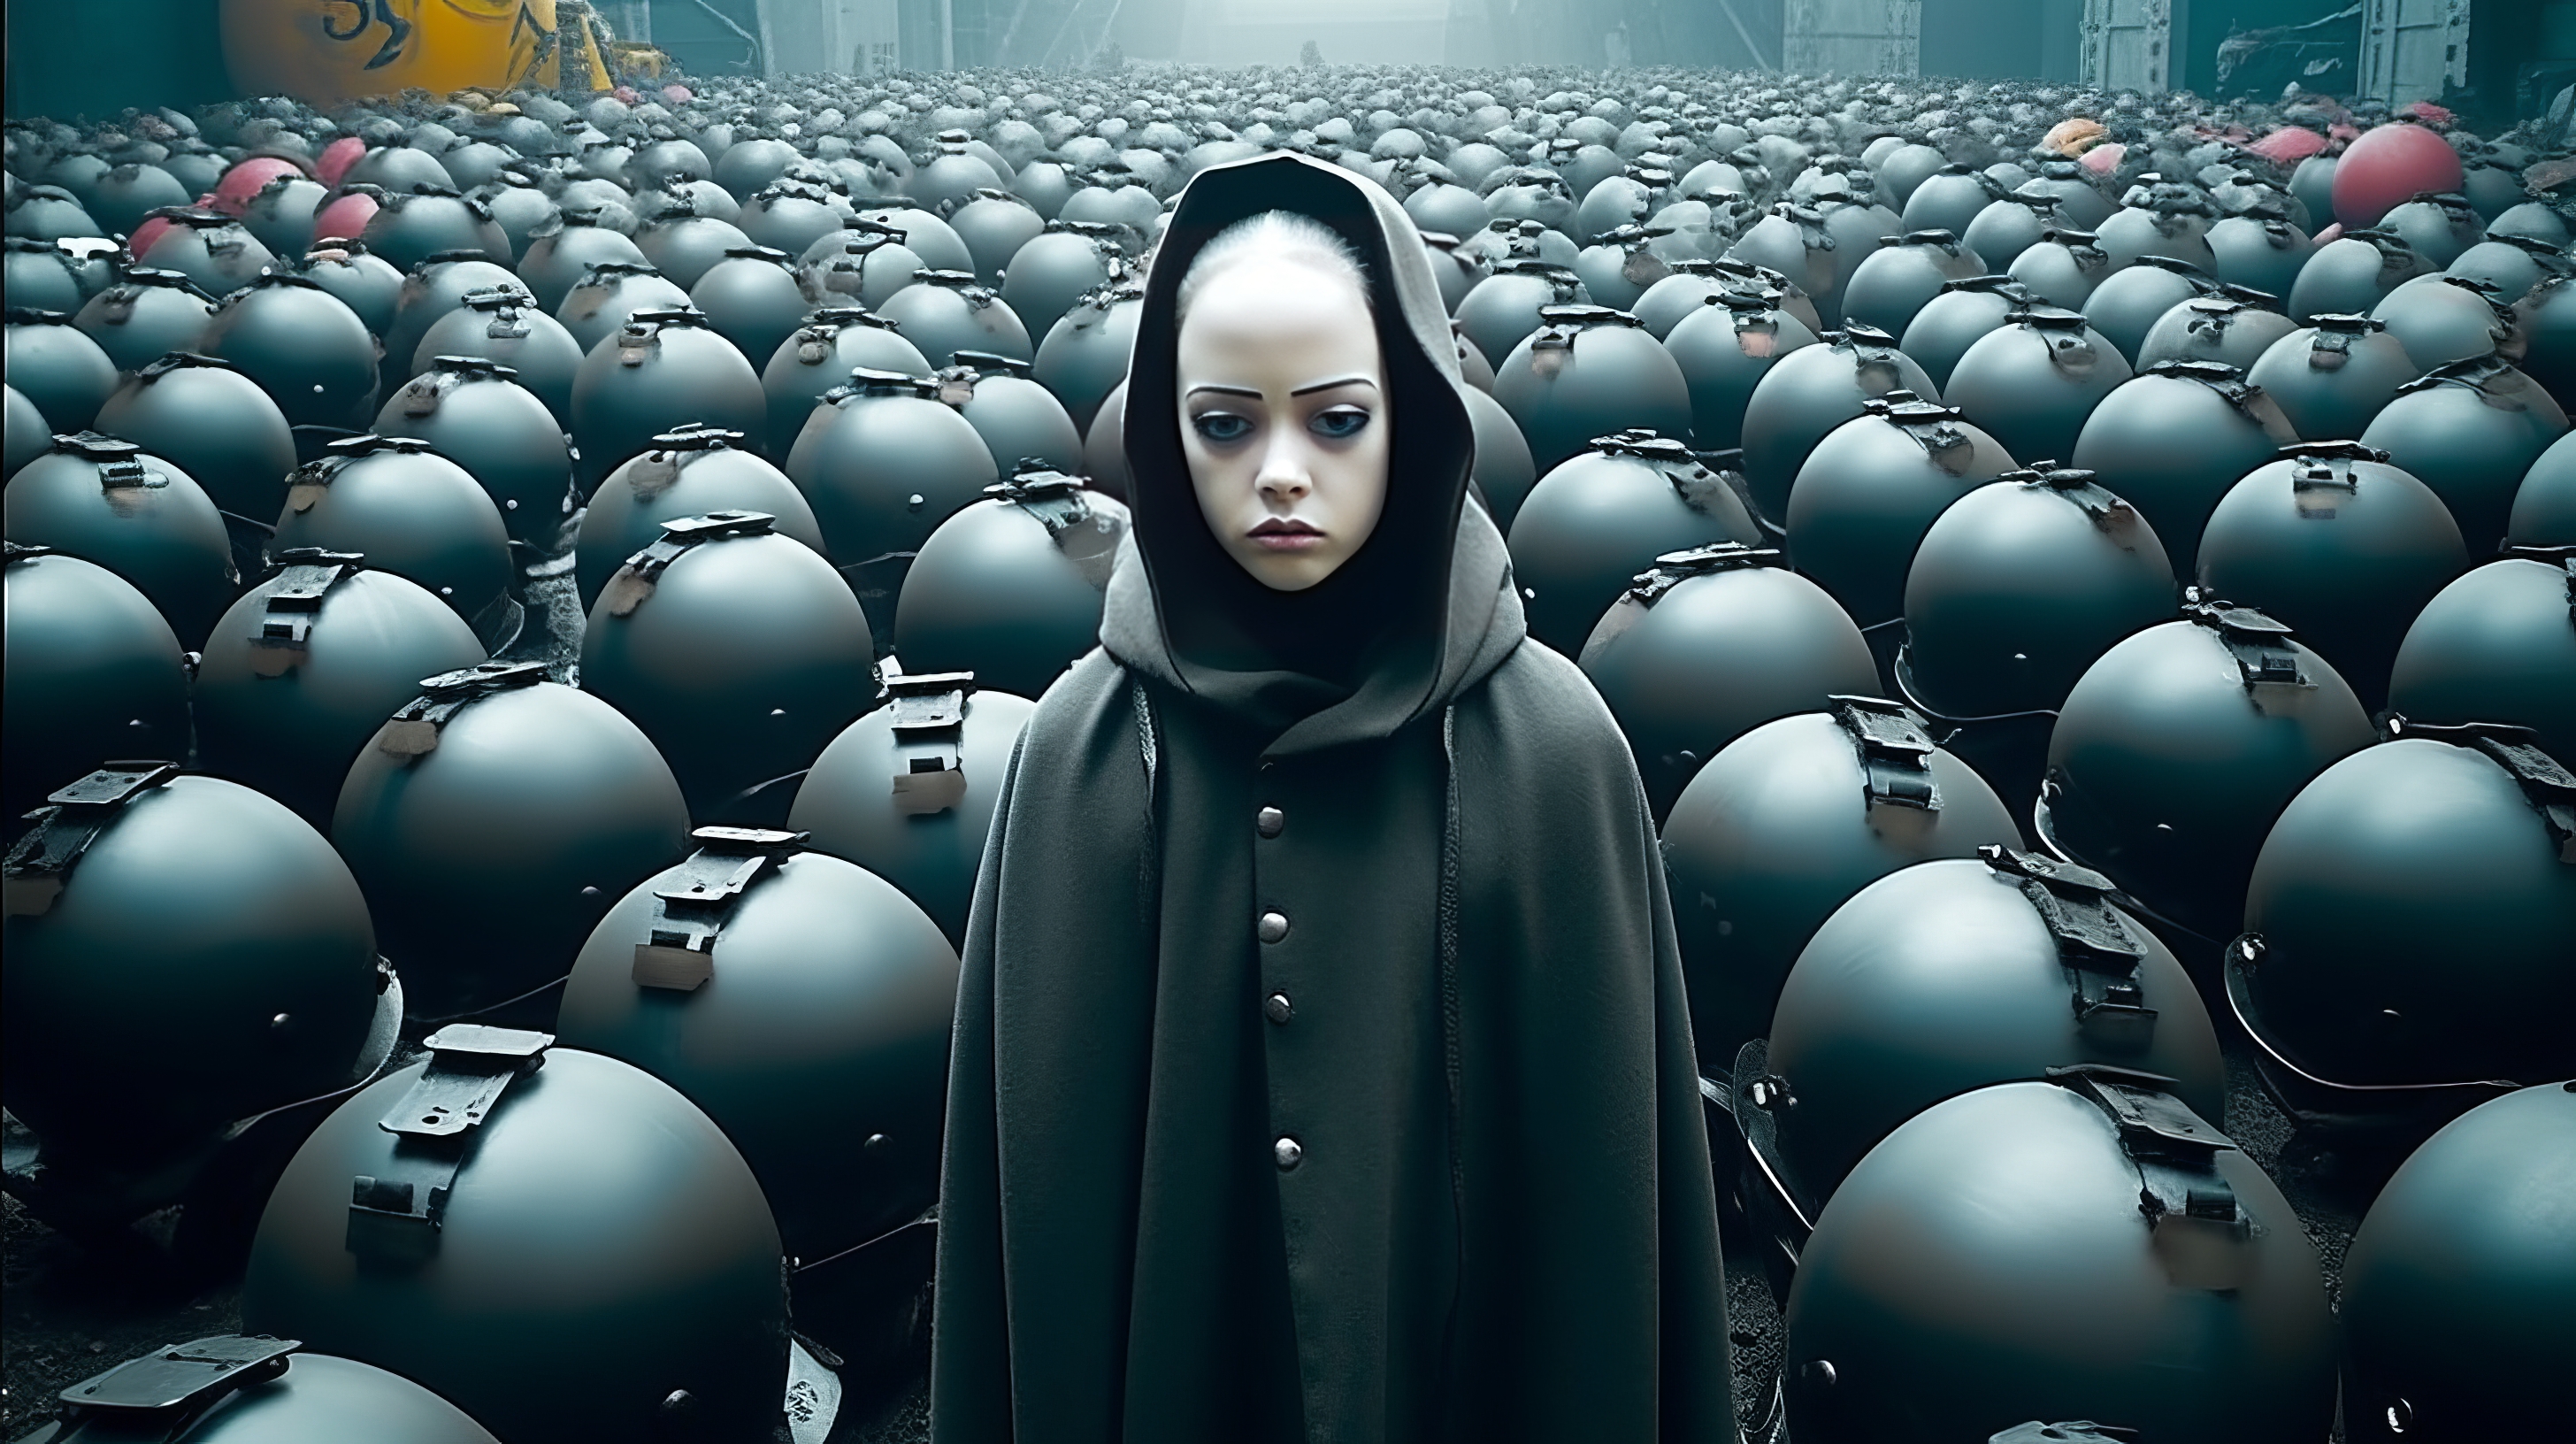 General 2912x1632 AI art science fiction dystopian film stills women looking at viewer